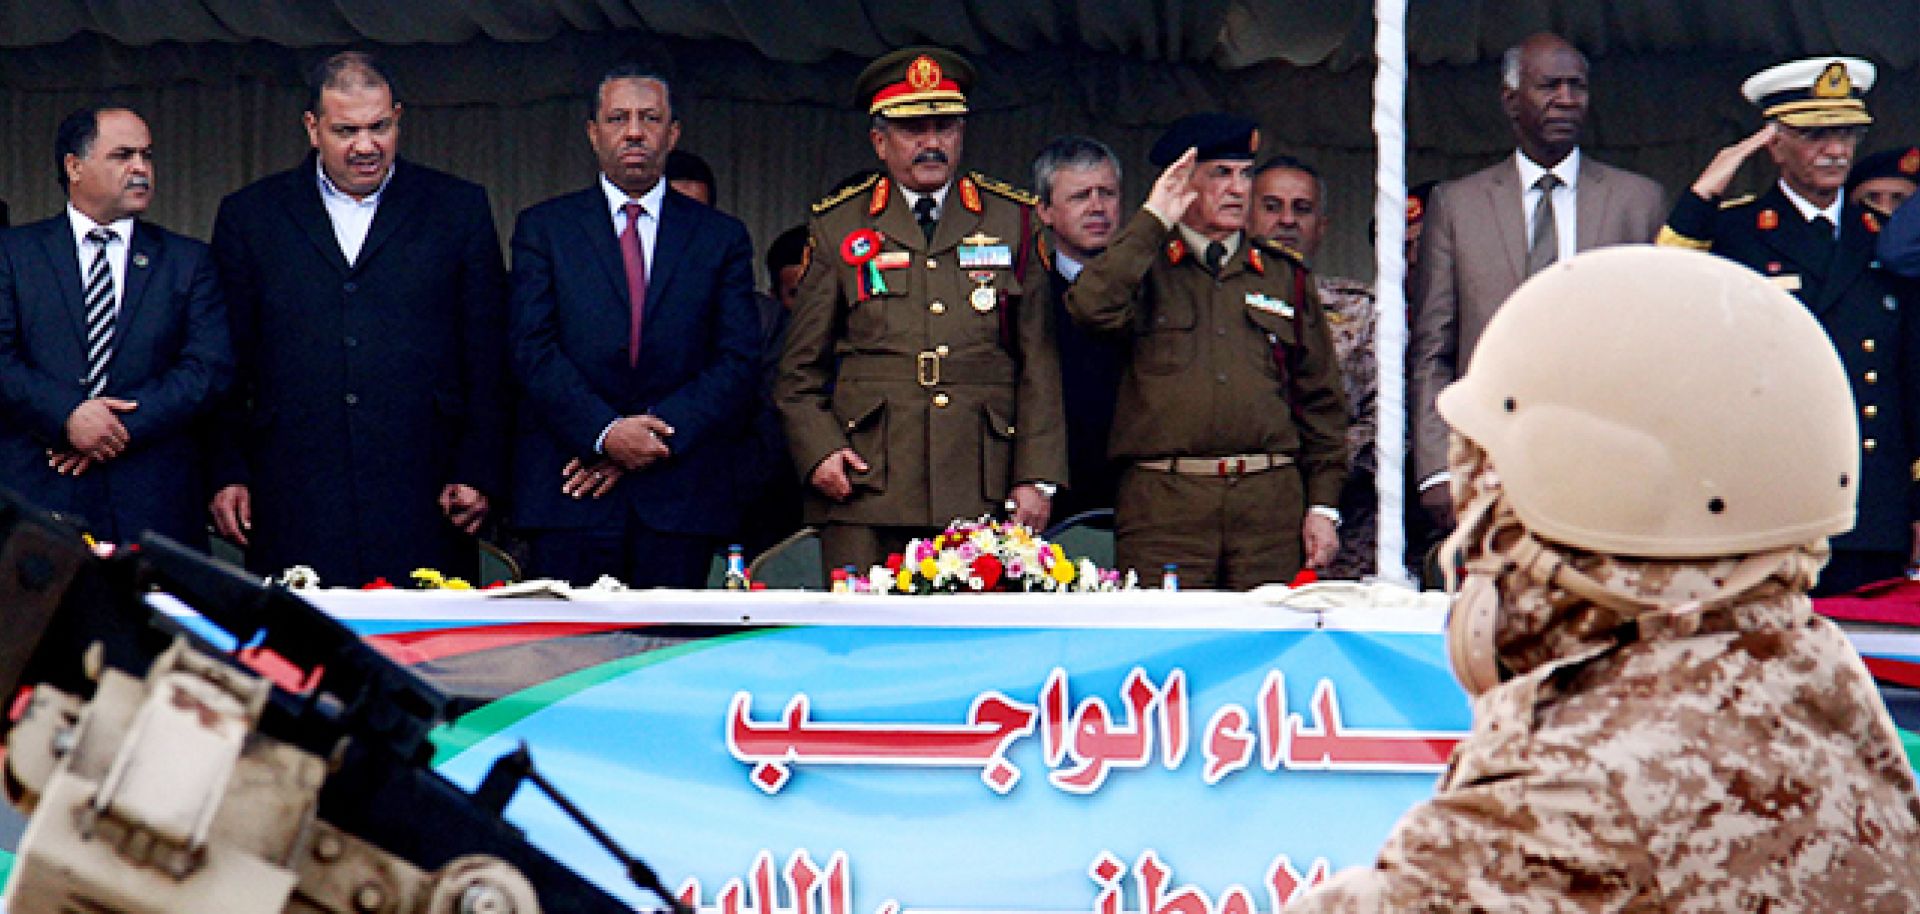 Libyan Defense Minister Abdullah al-Thani at a Libyan army graduation ceremony in Tripoli on Jan. 16.